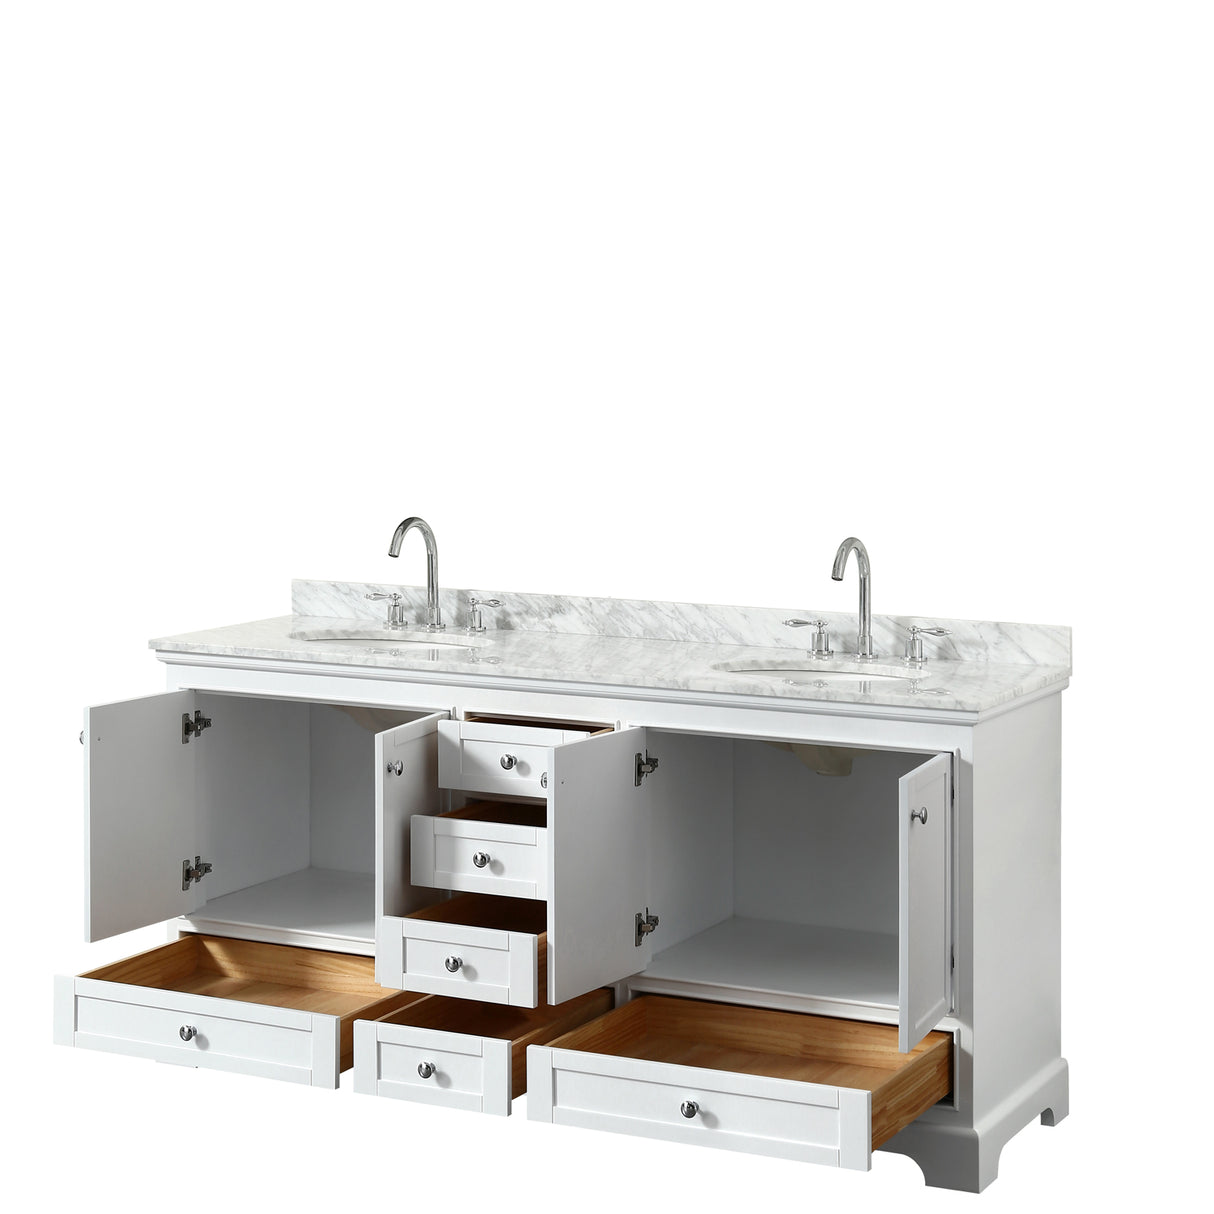 Deborah 72 Inch Double Bathroom Vanity in White White Carrara Marble Countertop Undermount Oval Sinks and No Mirrors